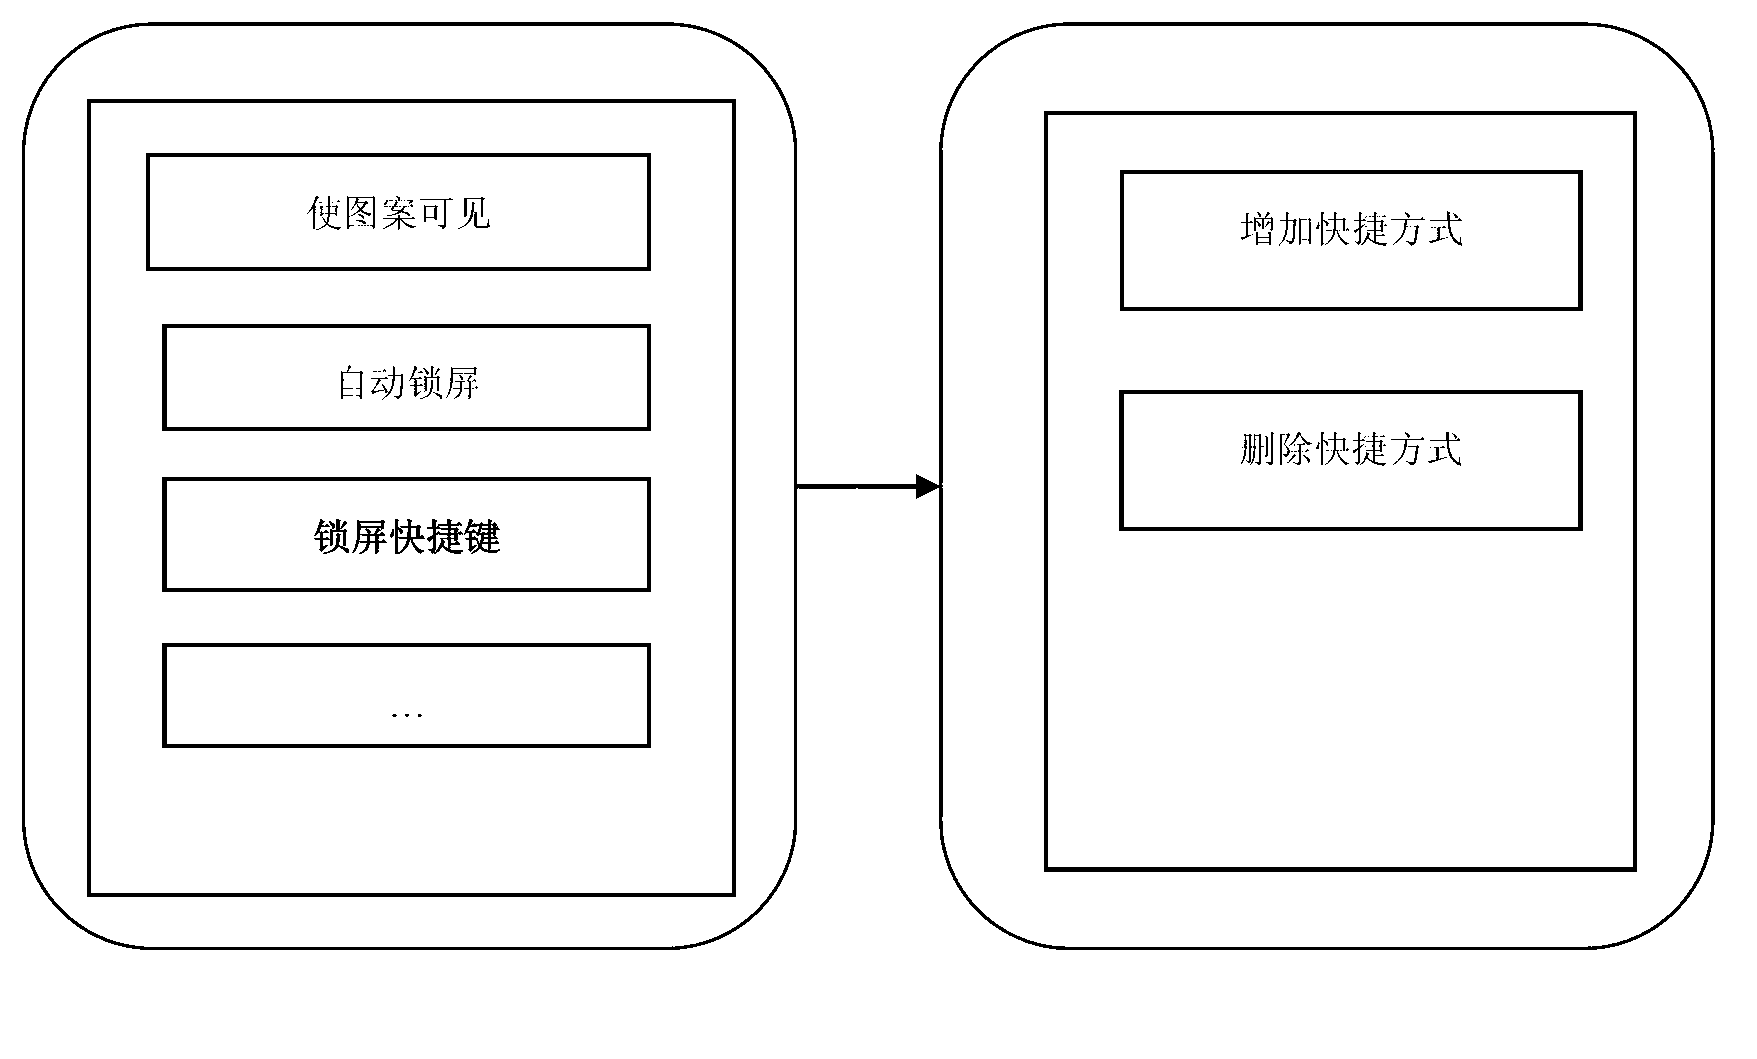 Screen unlocking method for mobile terminal